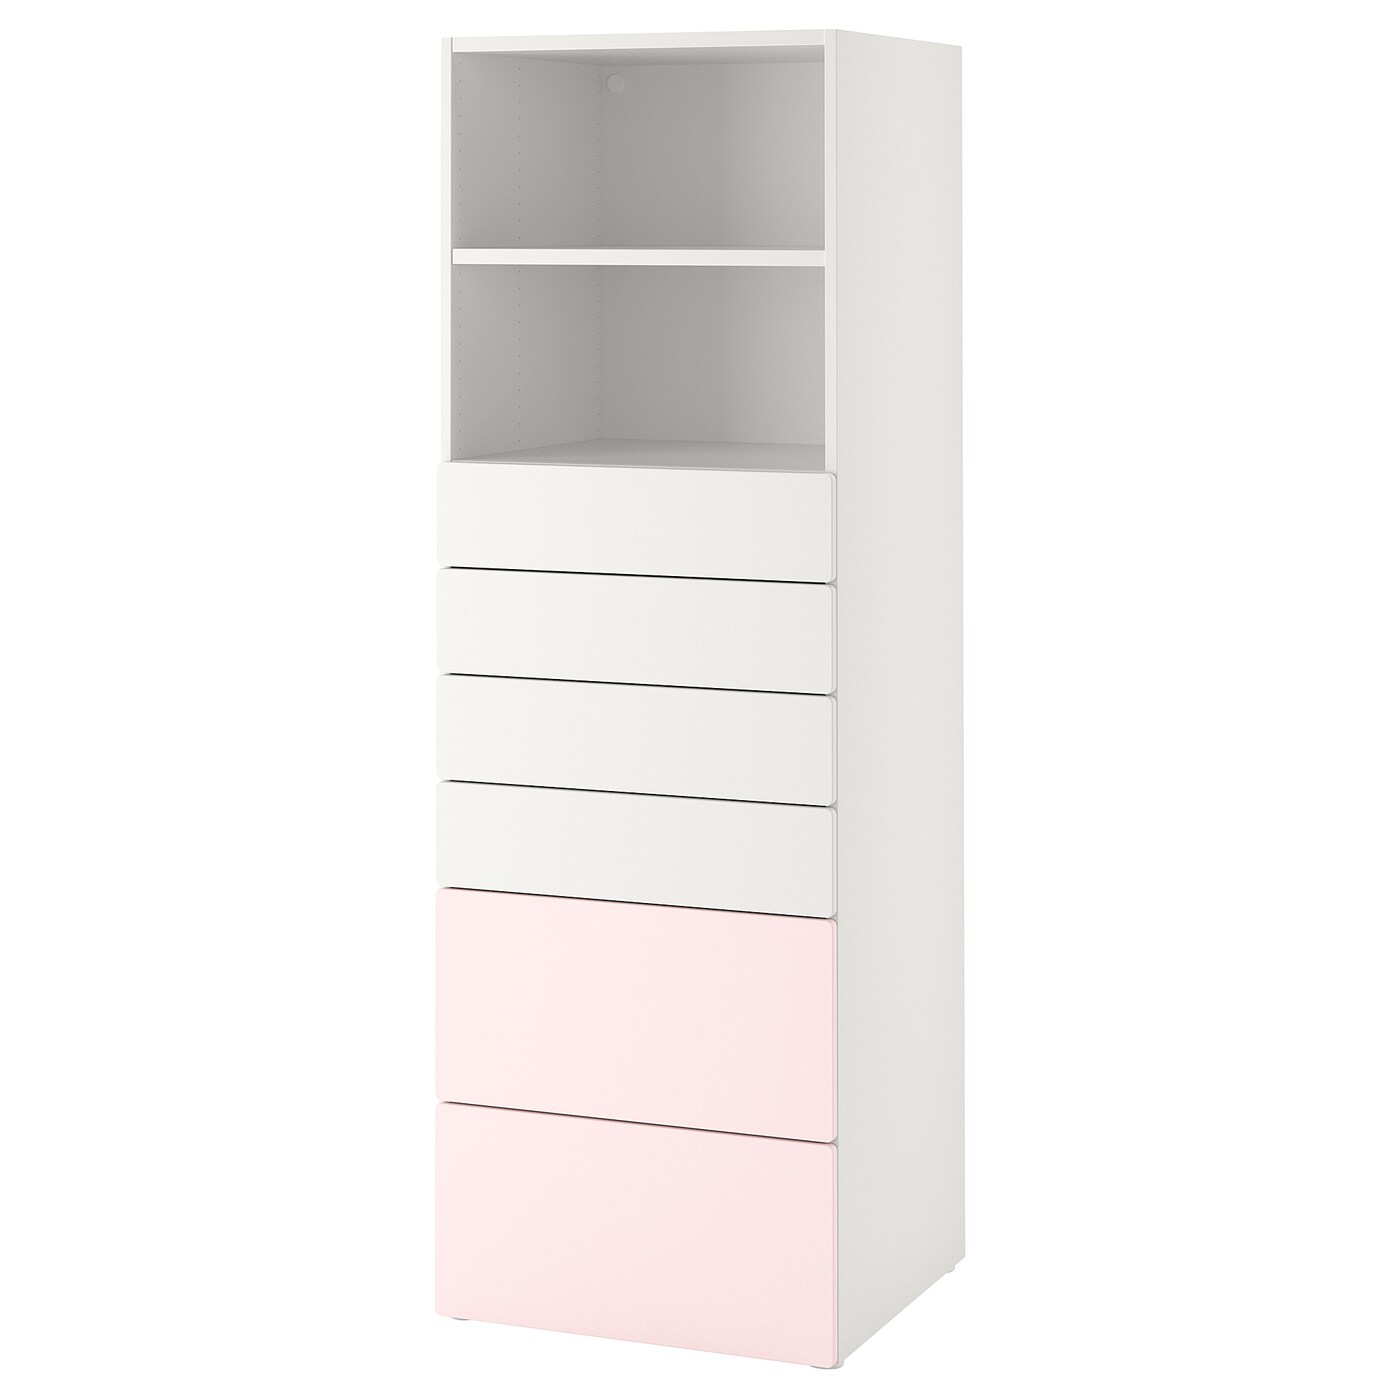 Комод детский - IKEA PLATSA/SMÅSTAD/SMASTAD, 181х60 см, белый/розовый, ИКЕА